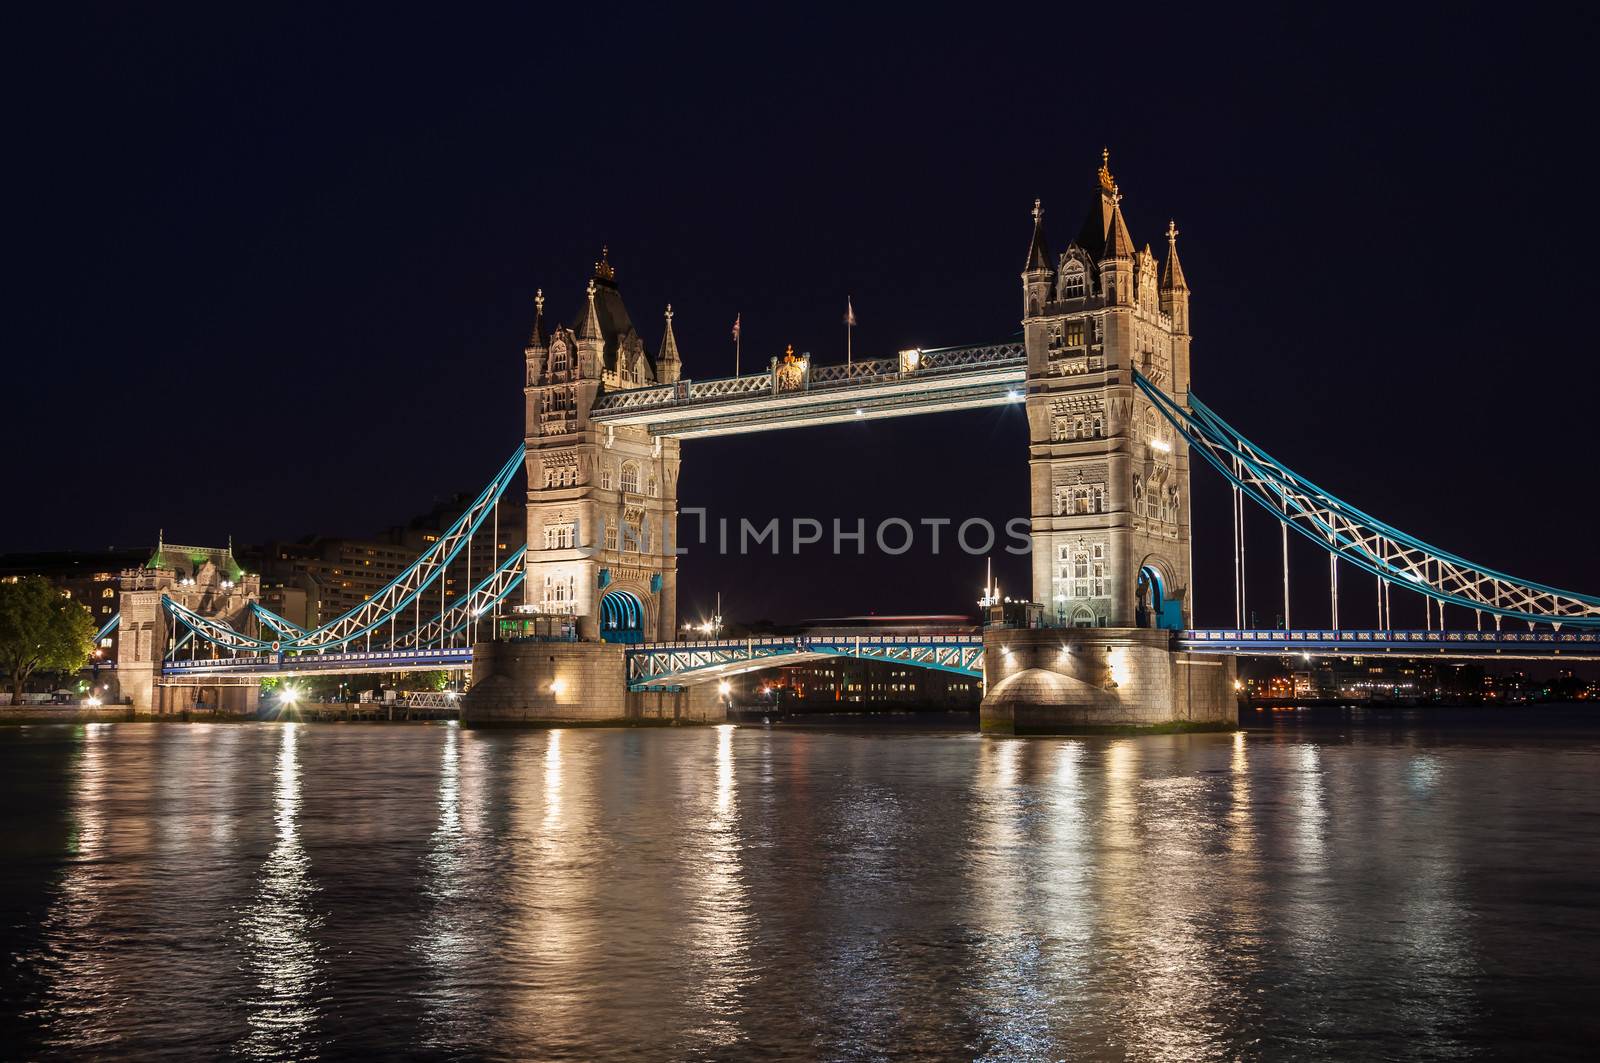 Tower Bridge in London at night by mkos83